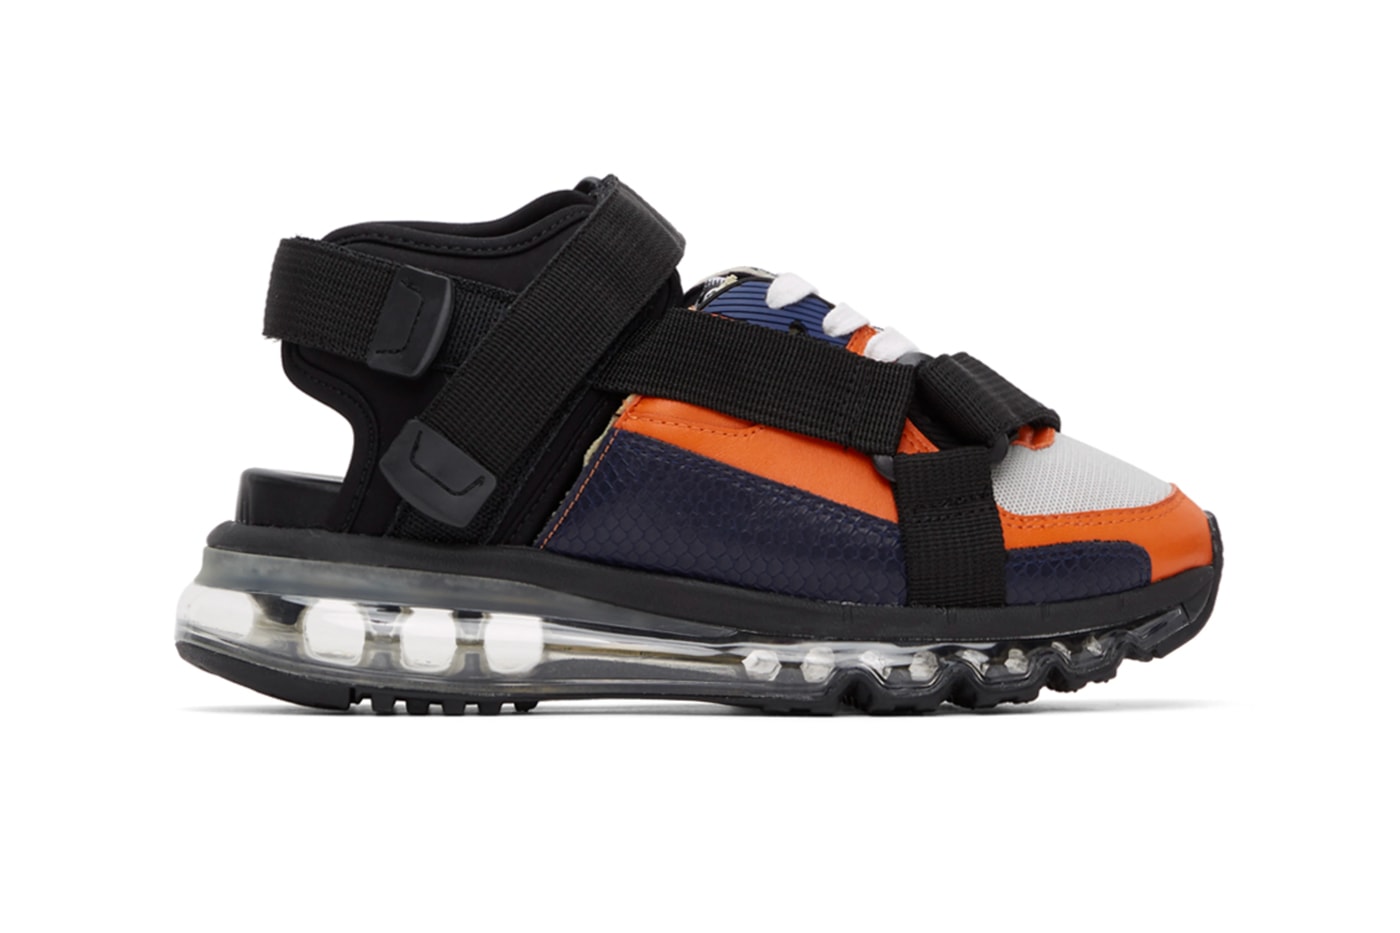 Maison Mihara Yasuhiro Half Sandals Black gray orange sneakers footwear shoes menswear streetwear runner trainers spring summer 2020 collection kicks japanese brand straps